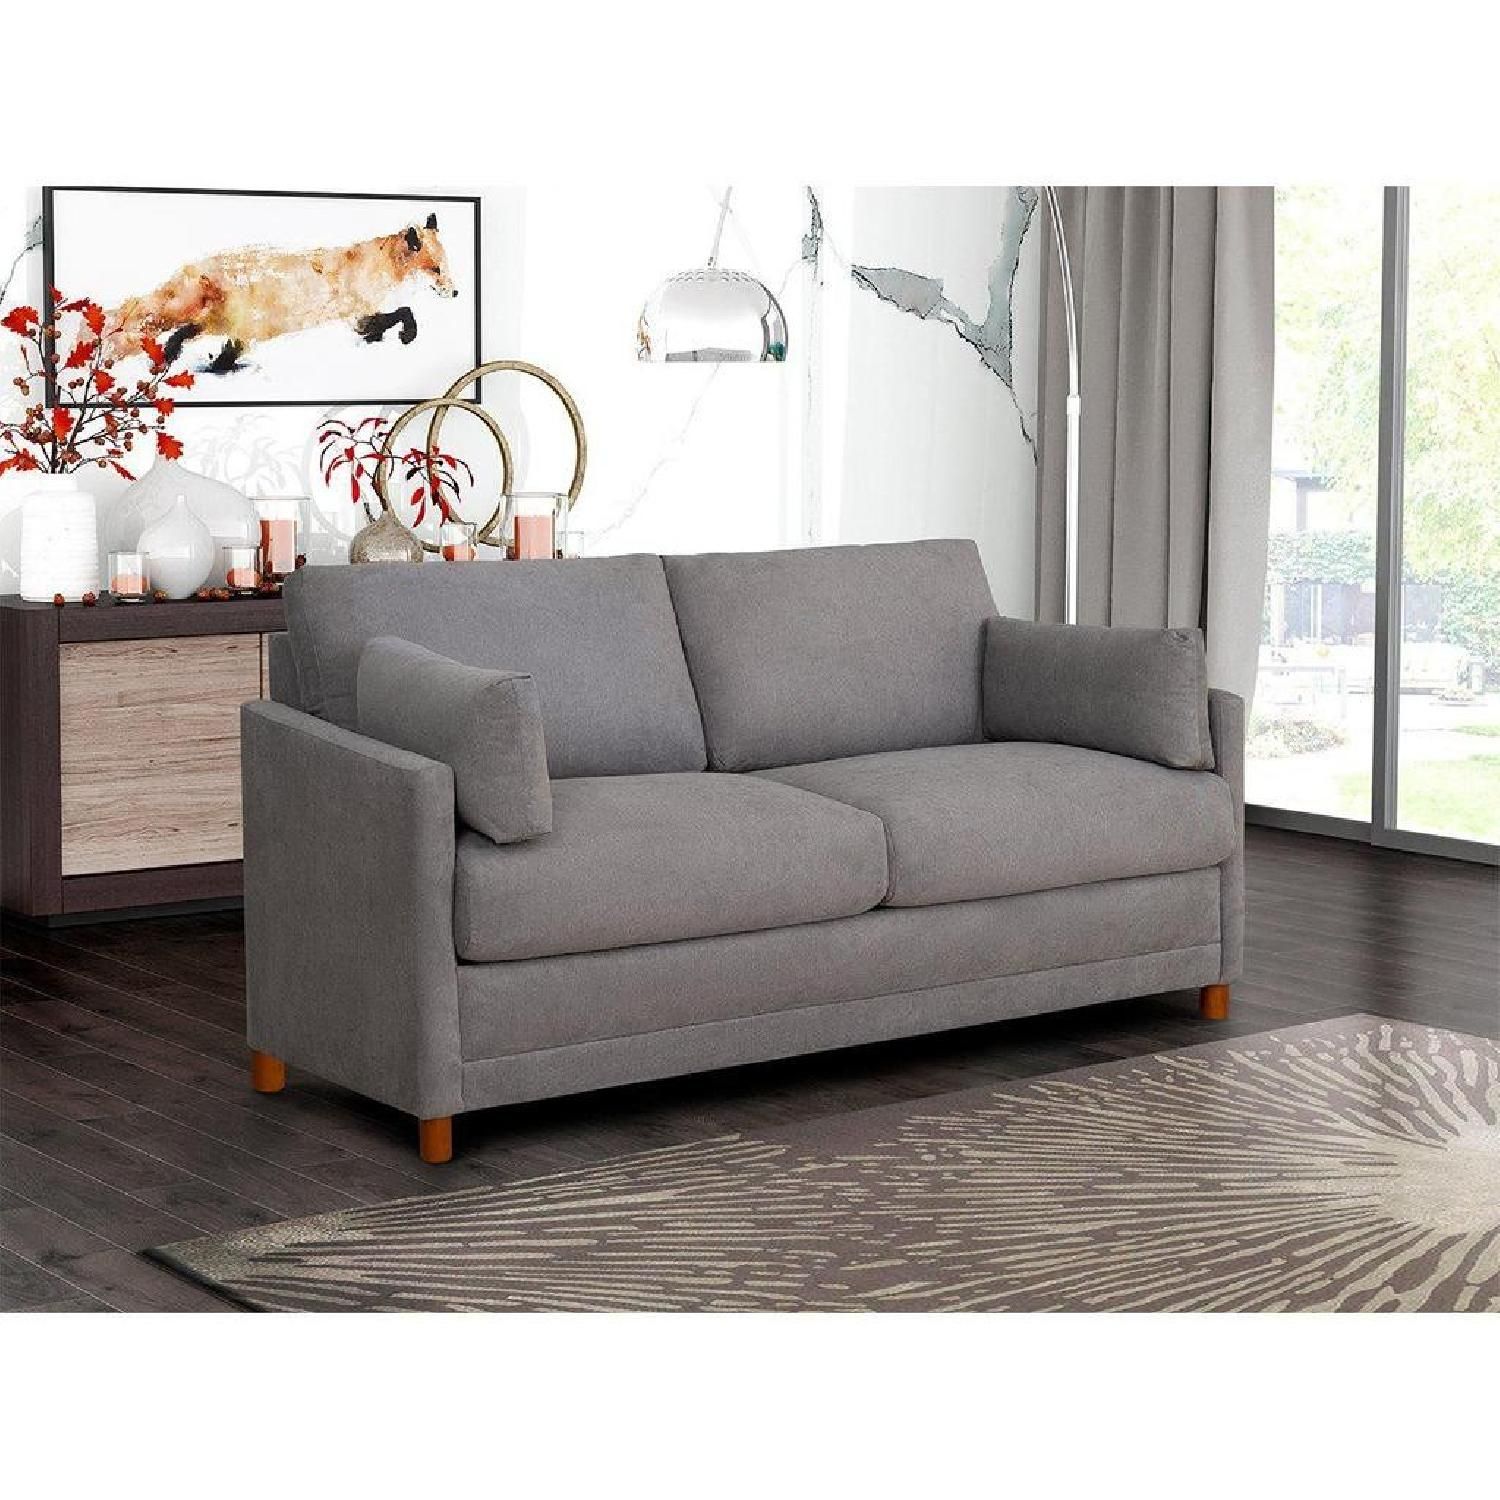 Jennifer Convertibles Modern Full Sleeper Sofa In Grey – Aptdeco In Convertible Gray Loveseat Sleepers (View 7 of 20)